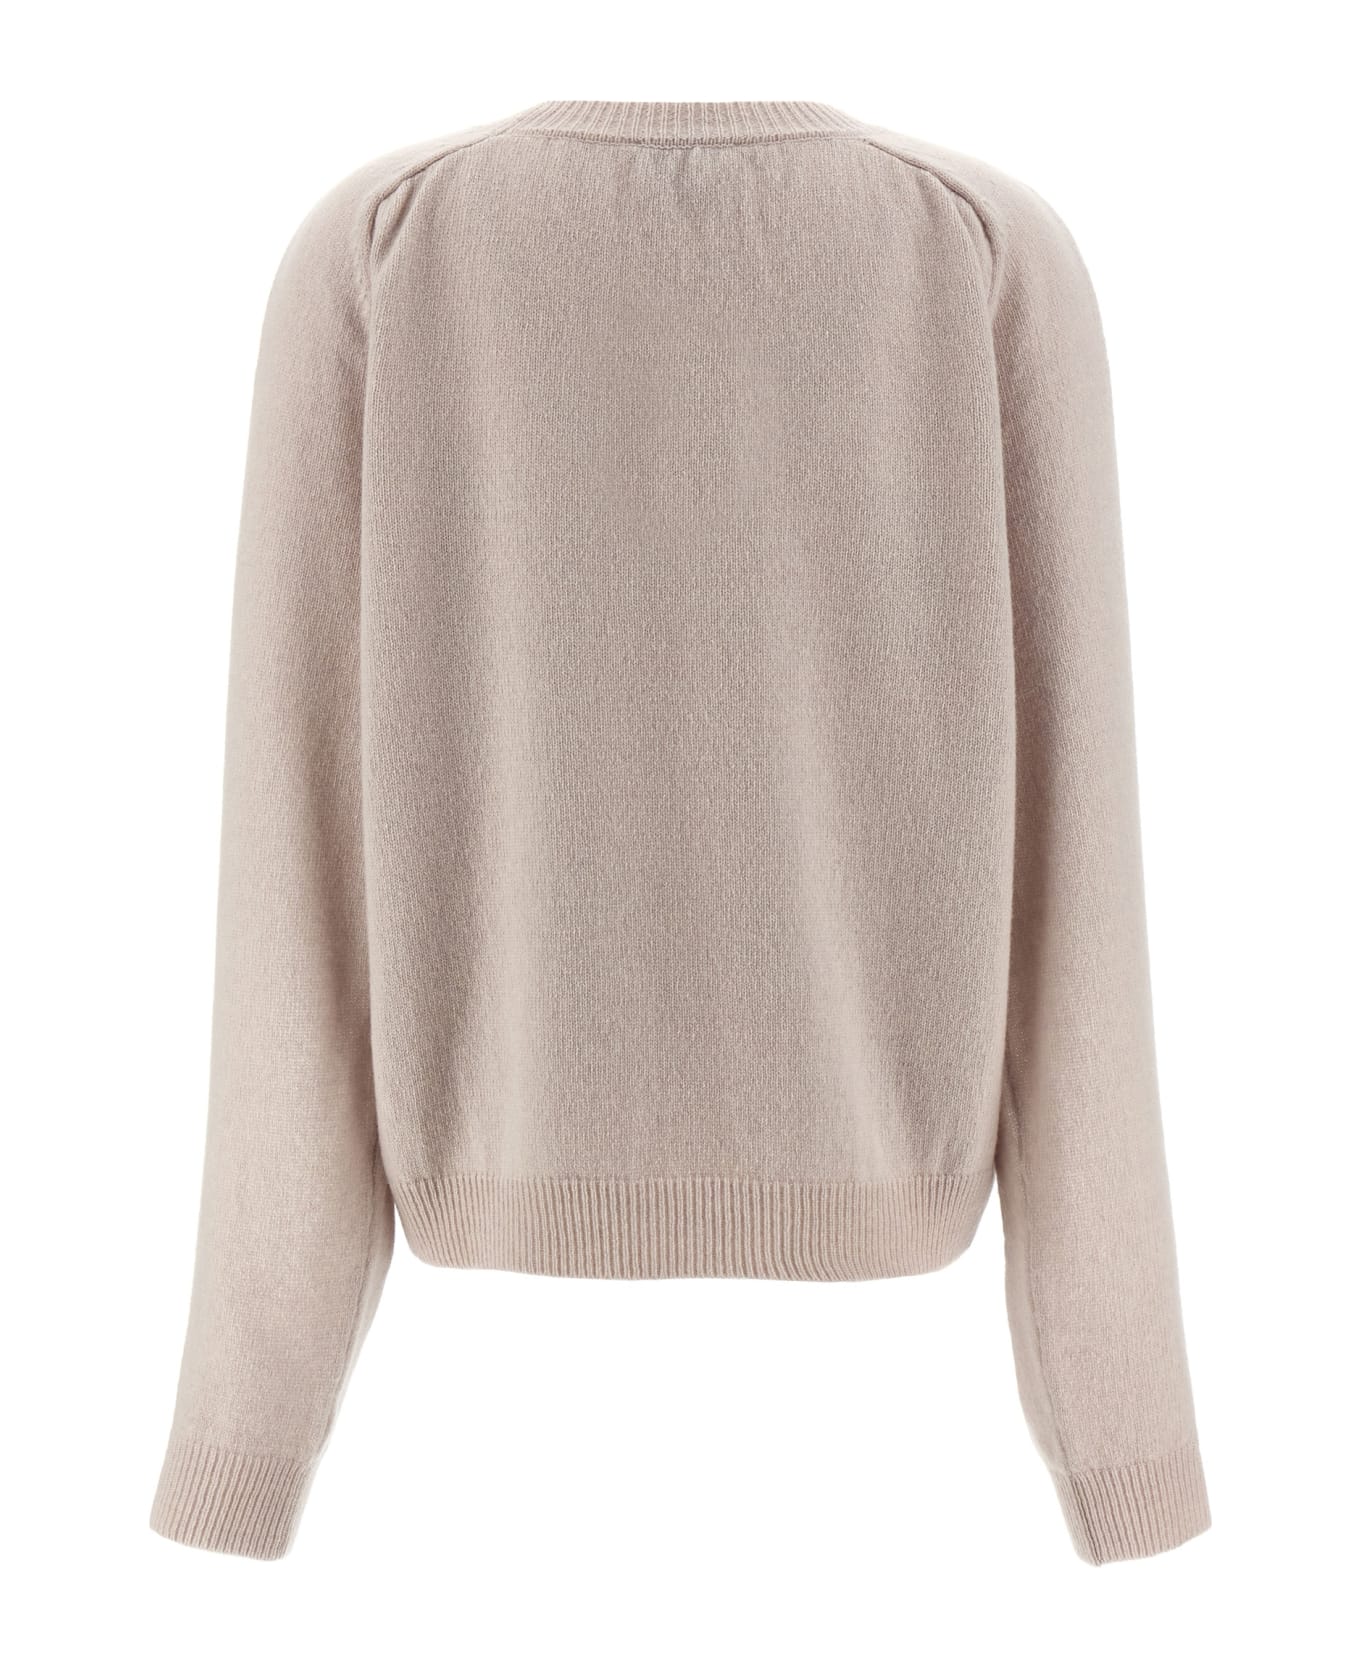 Ramael 'dorsal' Sweater - Gray